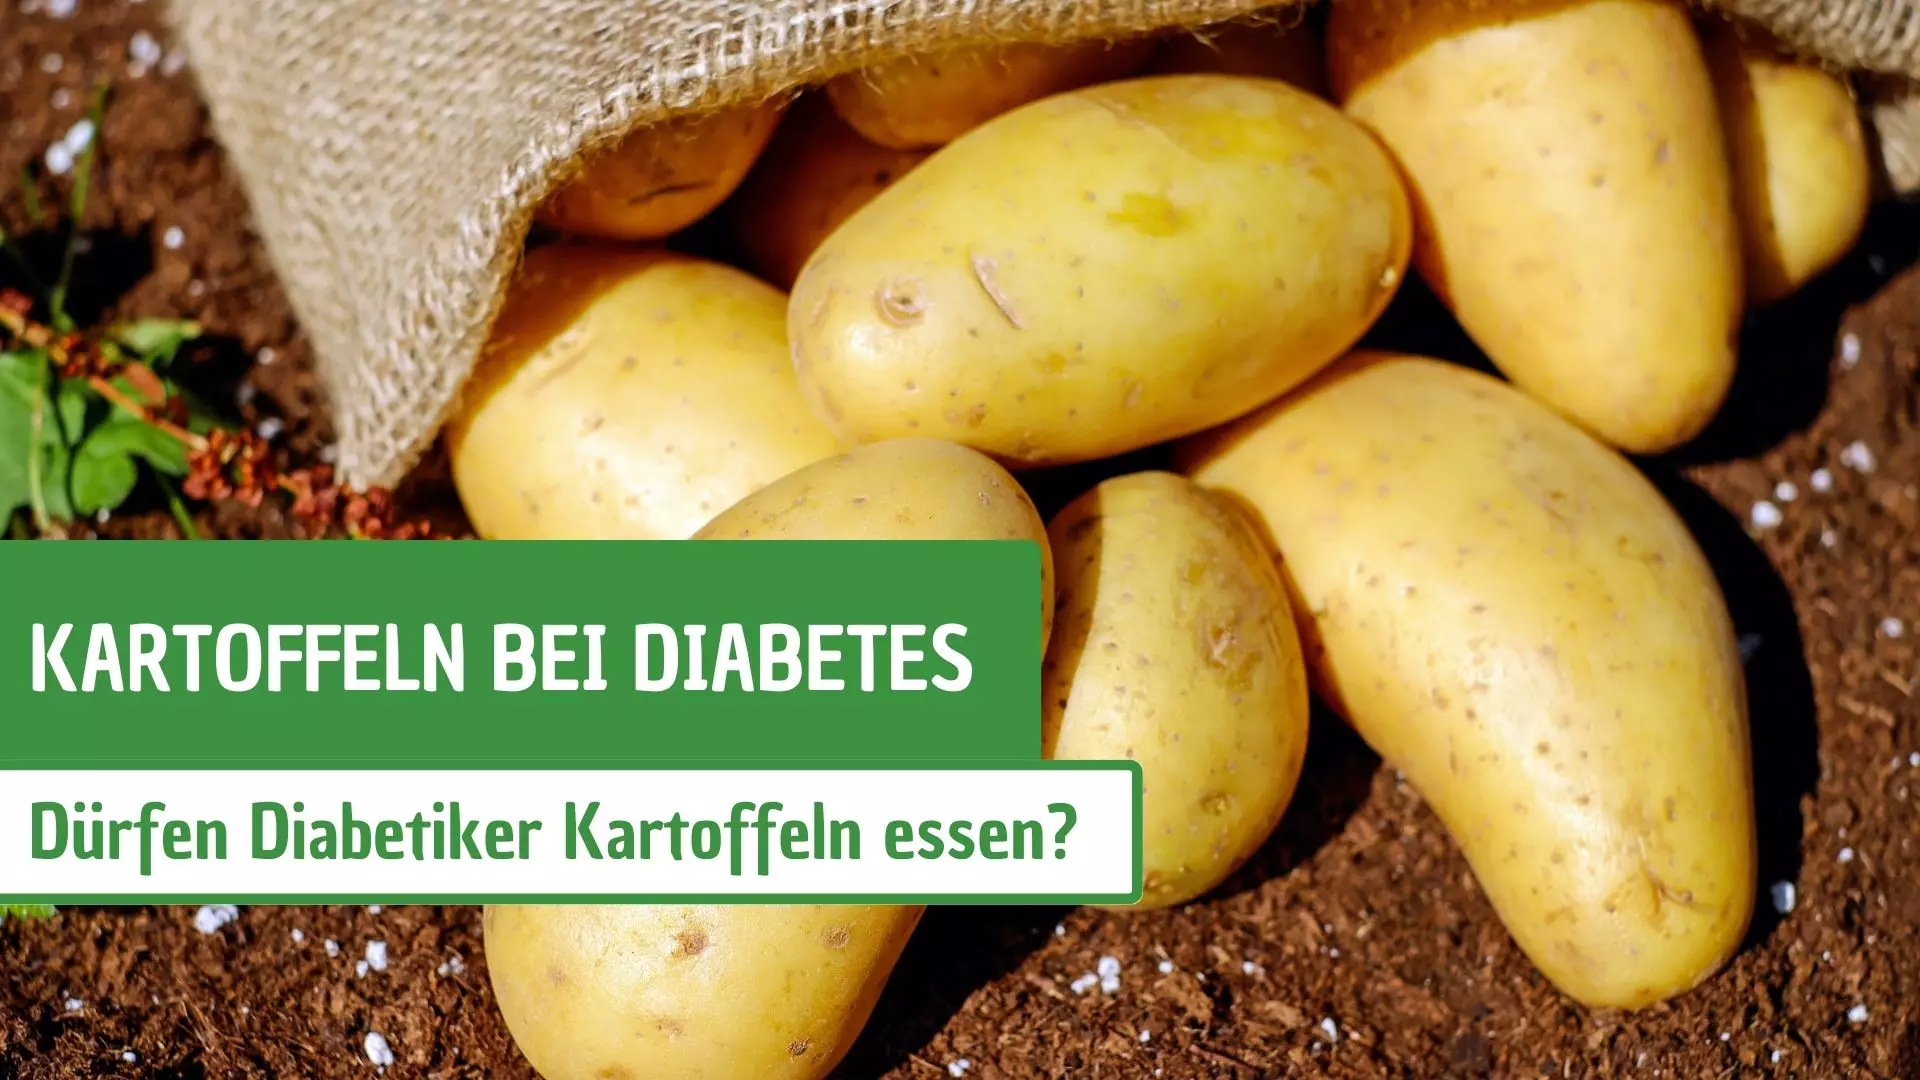 Kartoffeln bei Diabetes: Dürfen Diabetiker Kartoffeln essen? 